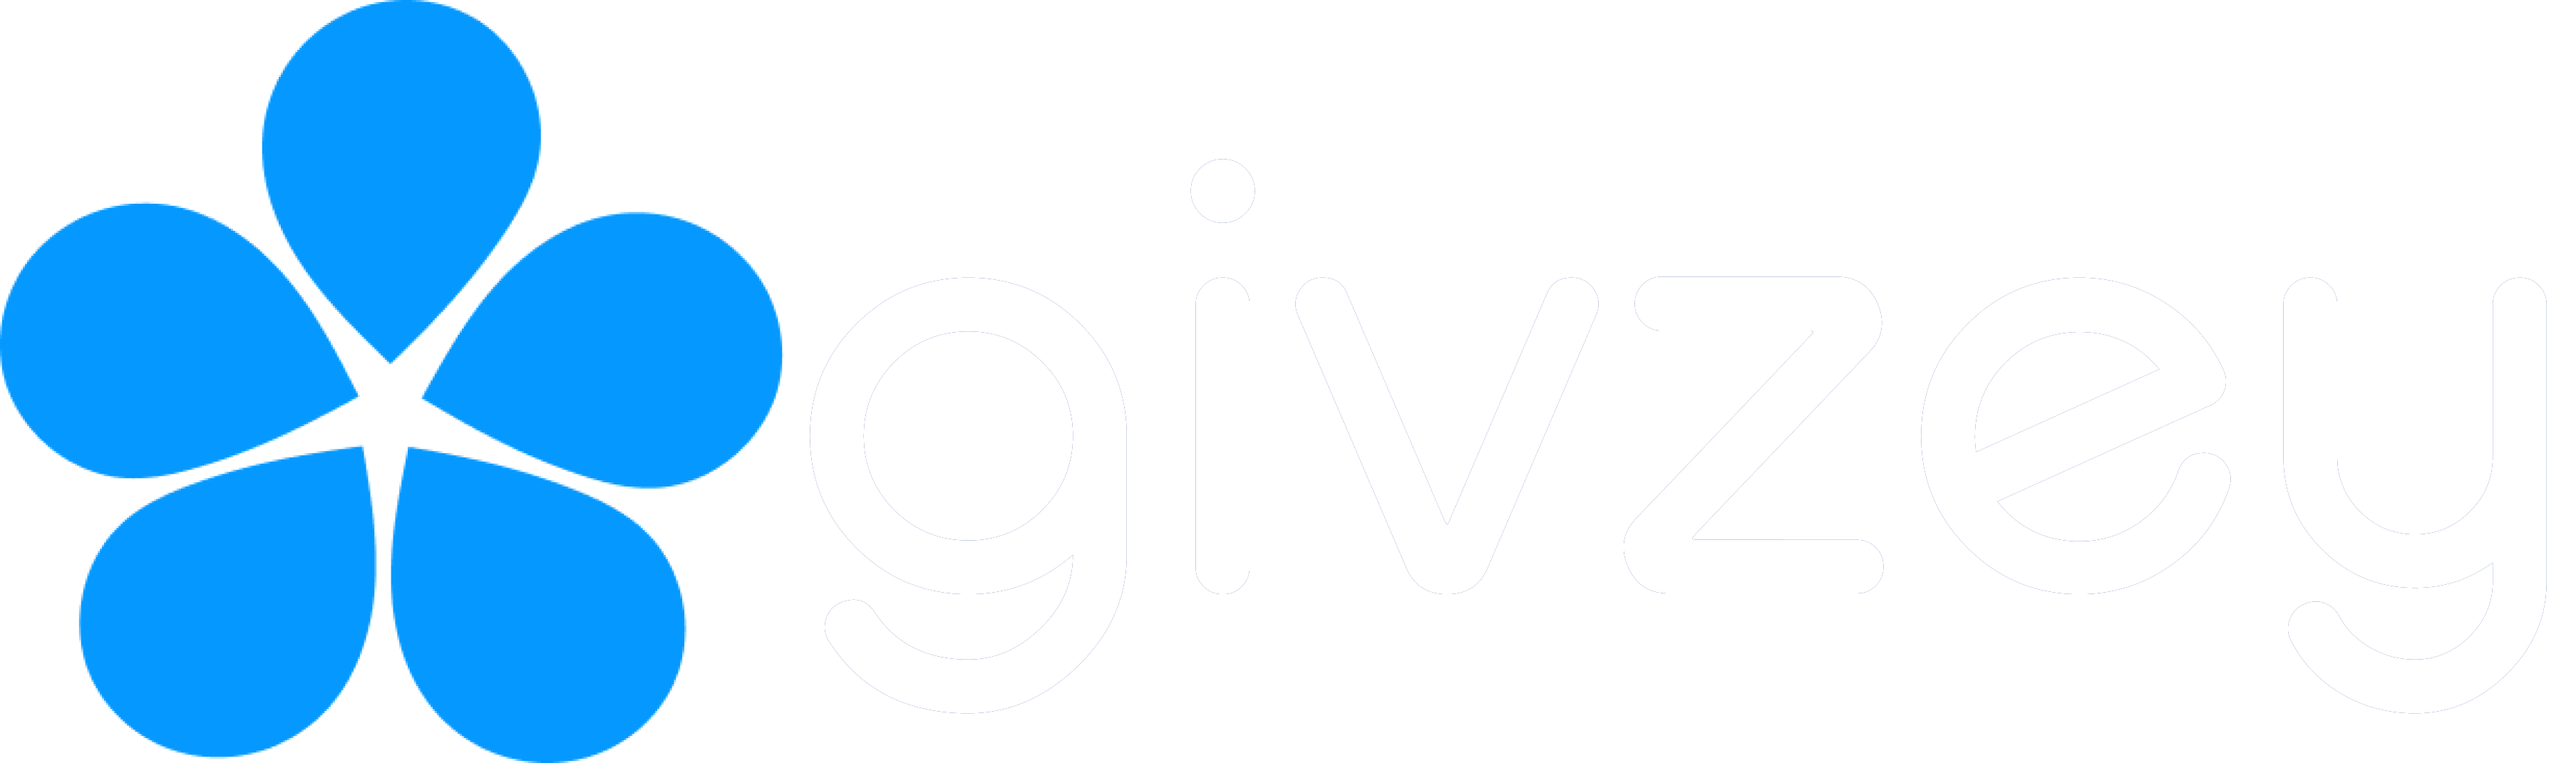 Givzey Logo Blue Flower White Text